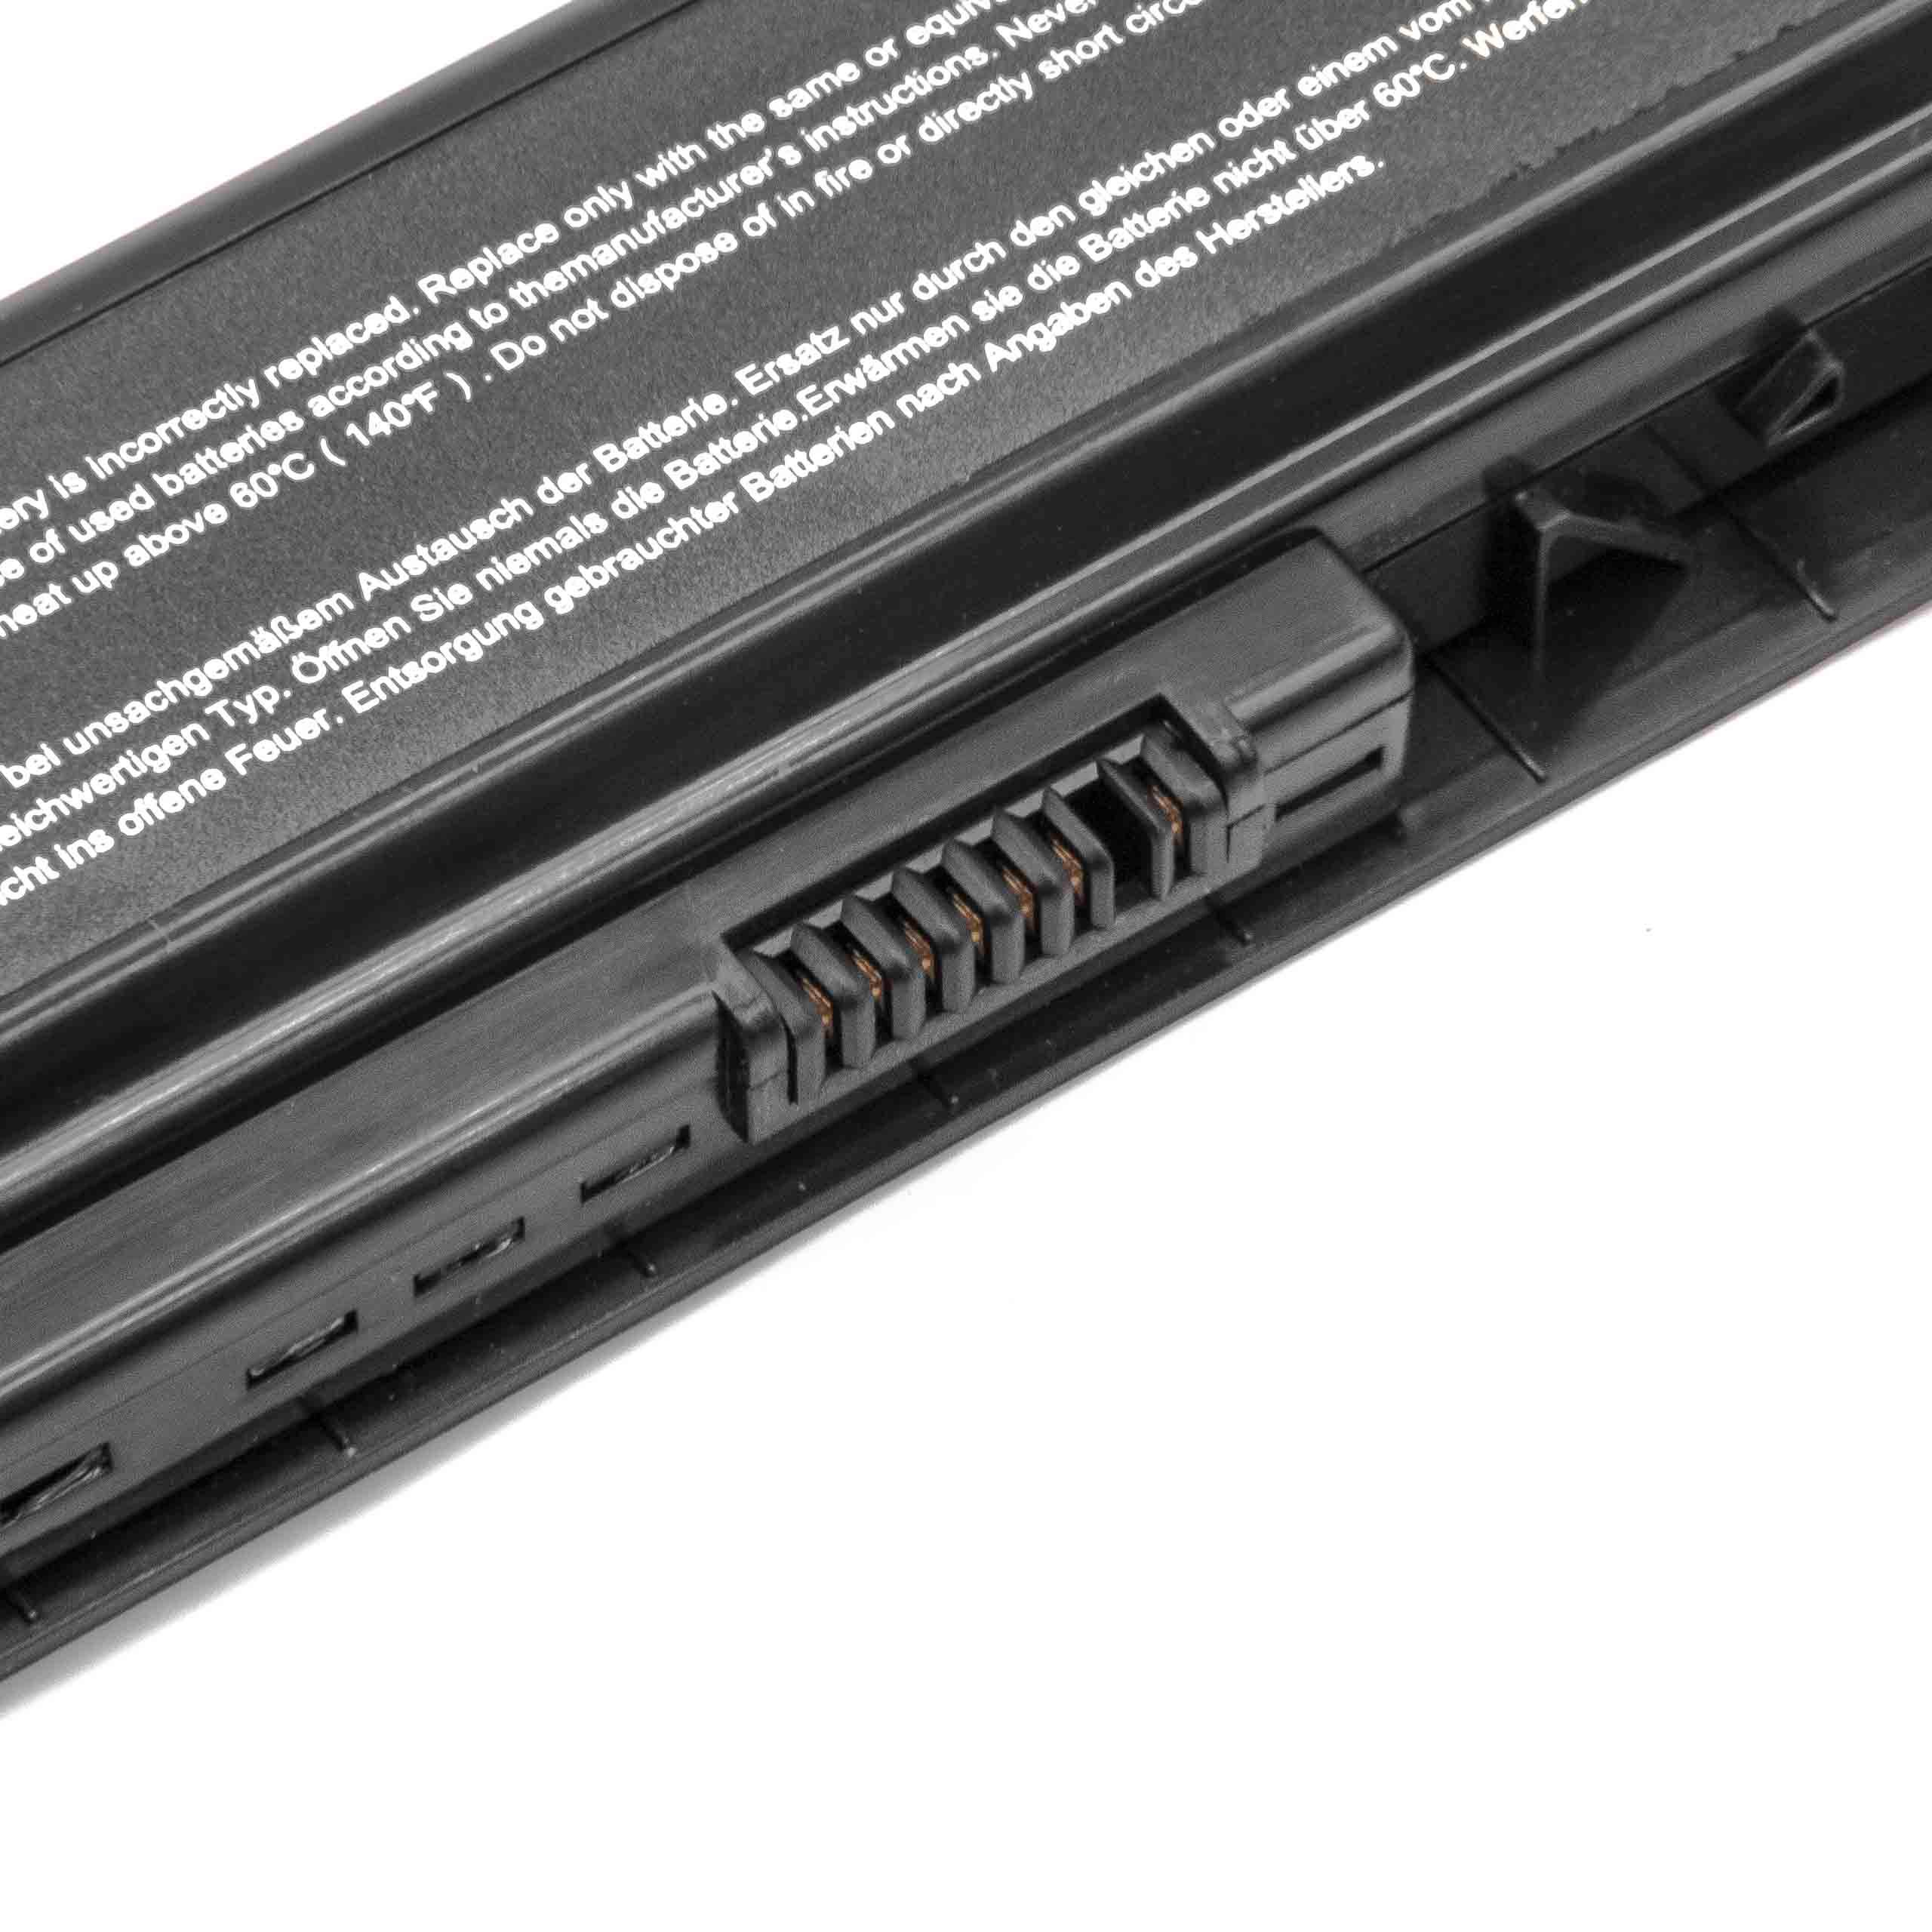 Notebook Battery Replacement for Samsung AA-PLAN6AB, AA-PBAN6AB, AA-PLAN9AB - 4400mAh 10.8V Li-Ion, black